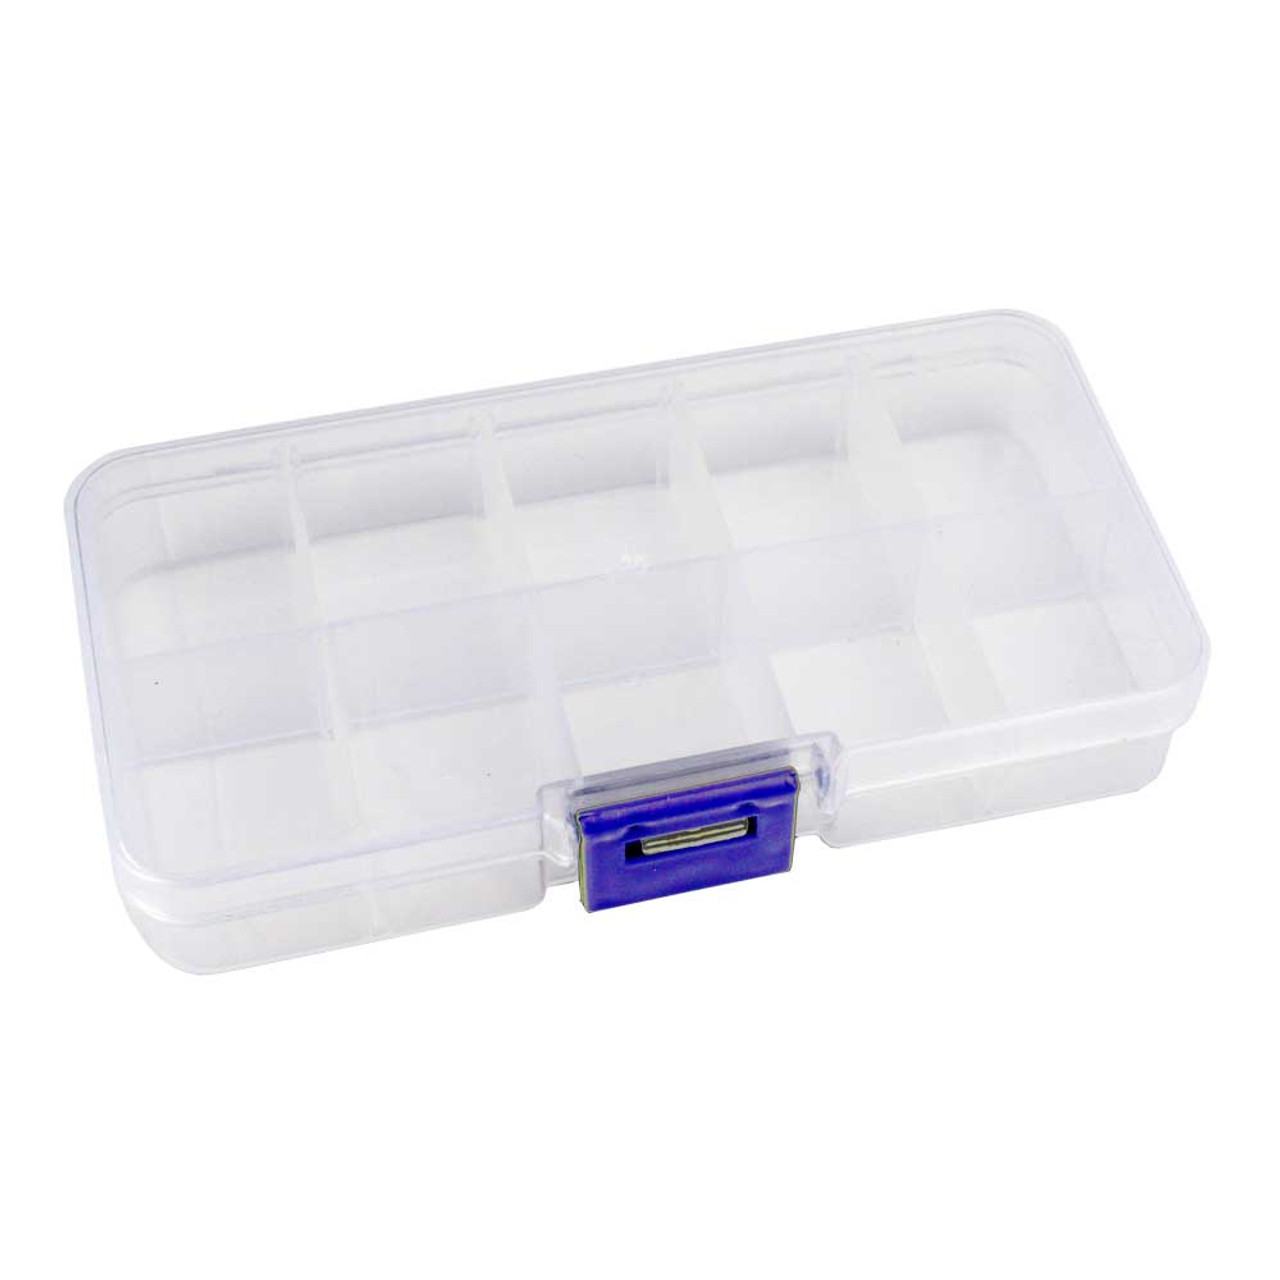  Leinuosen 10 Pieces Small Plastic Box Flat Organizer